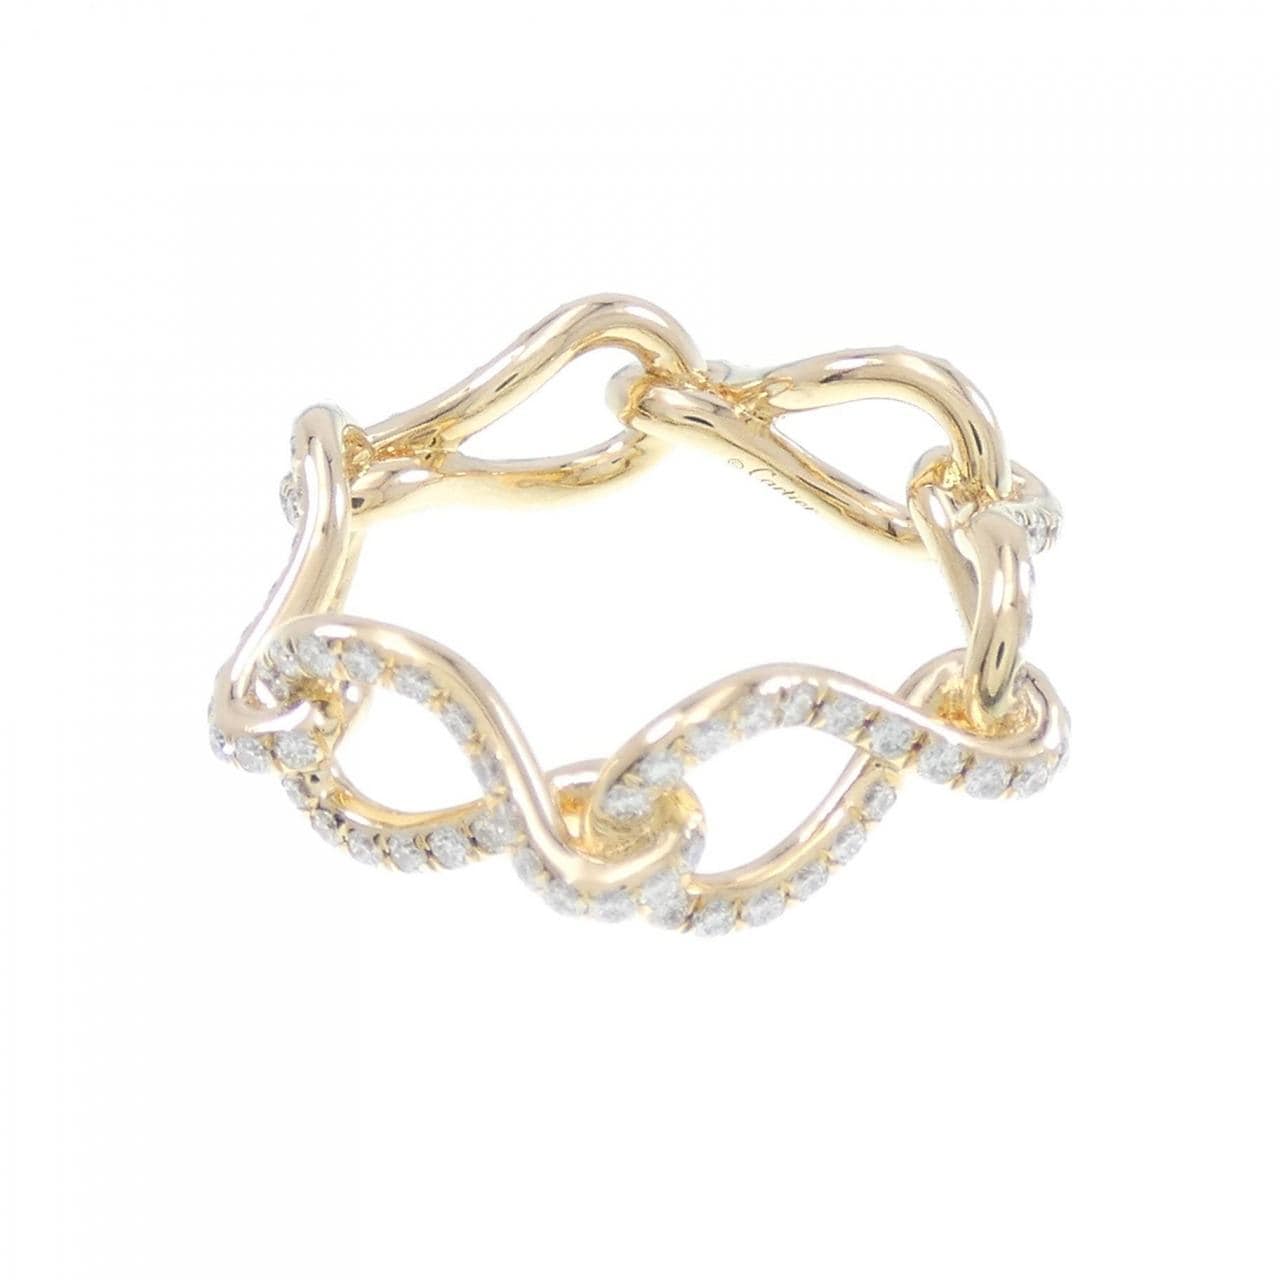 KOMEHYO|Cartier Diamond Ring|Cartier|Brand Jewelry|Rings|Others ...